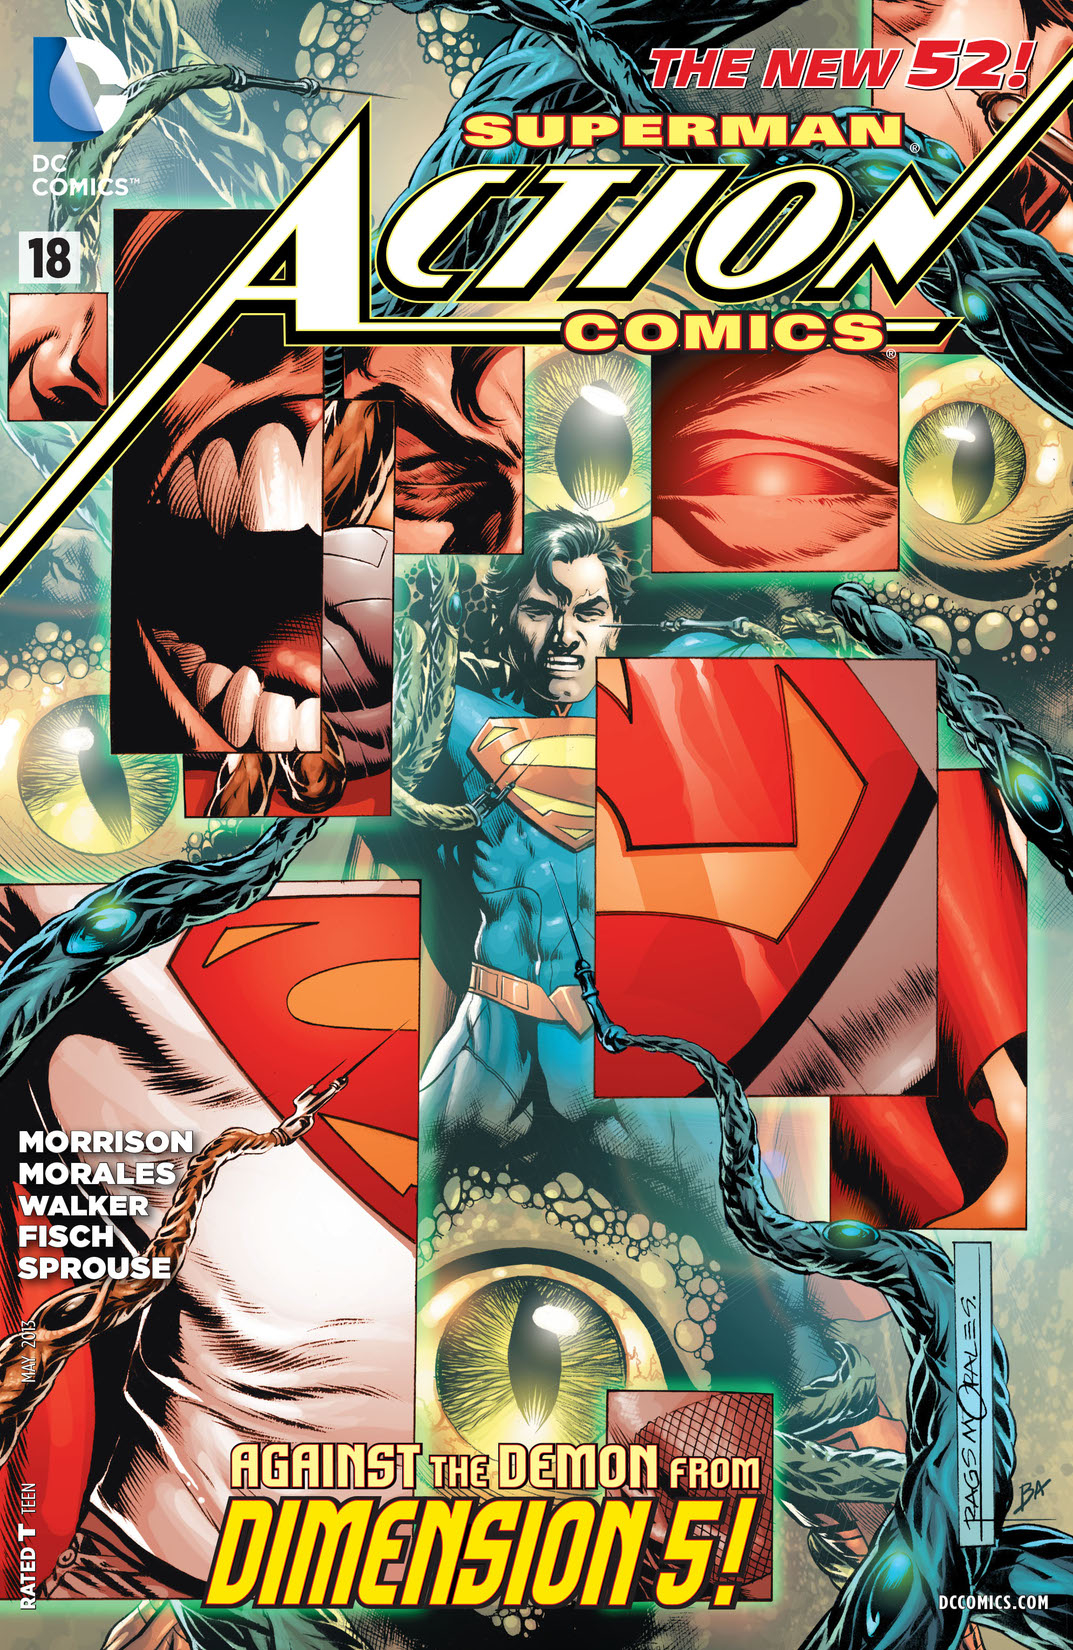 Action Comics (2011-) #18 preview images